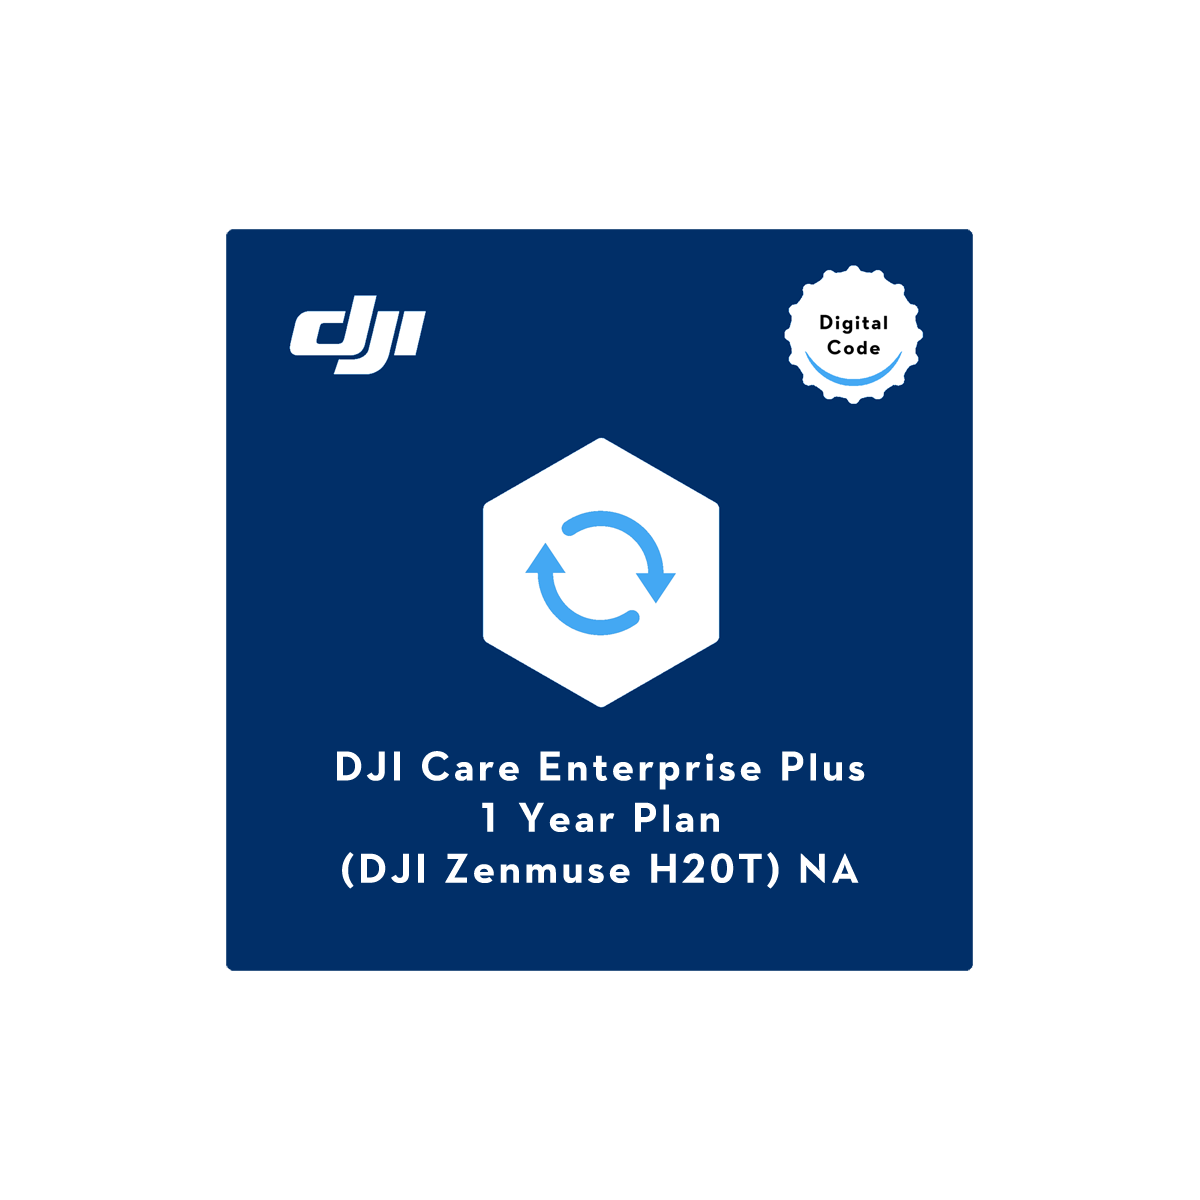 DJI Care Enterprise Plus (H20T) NA